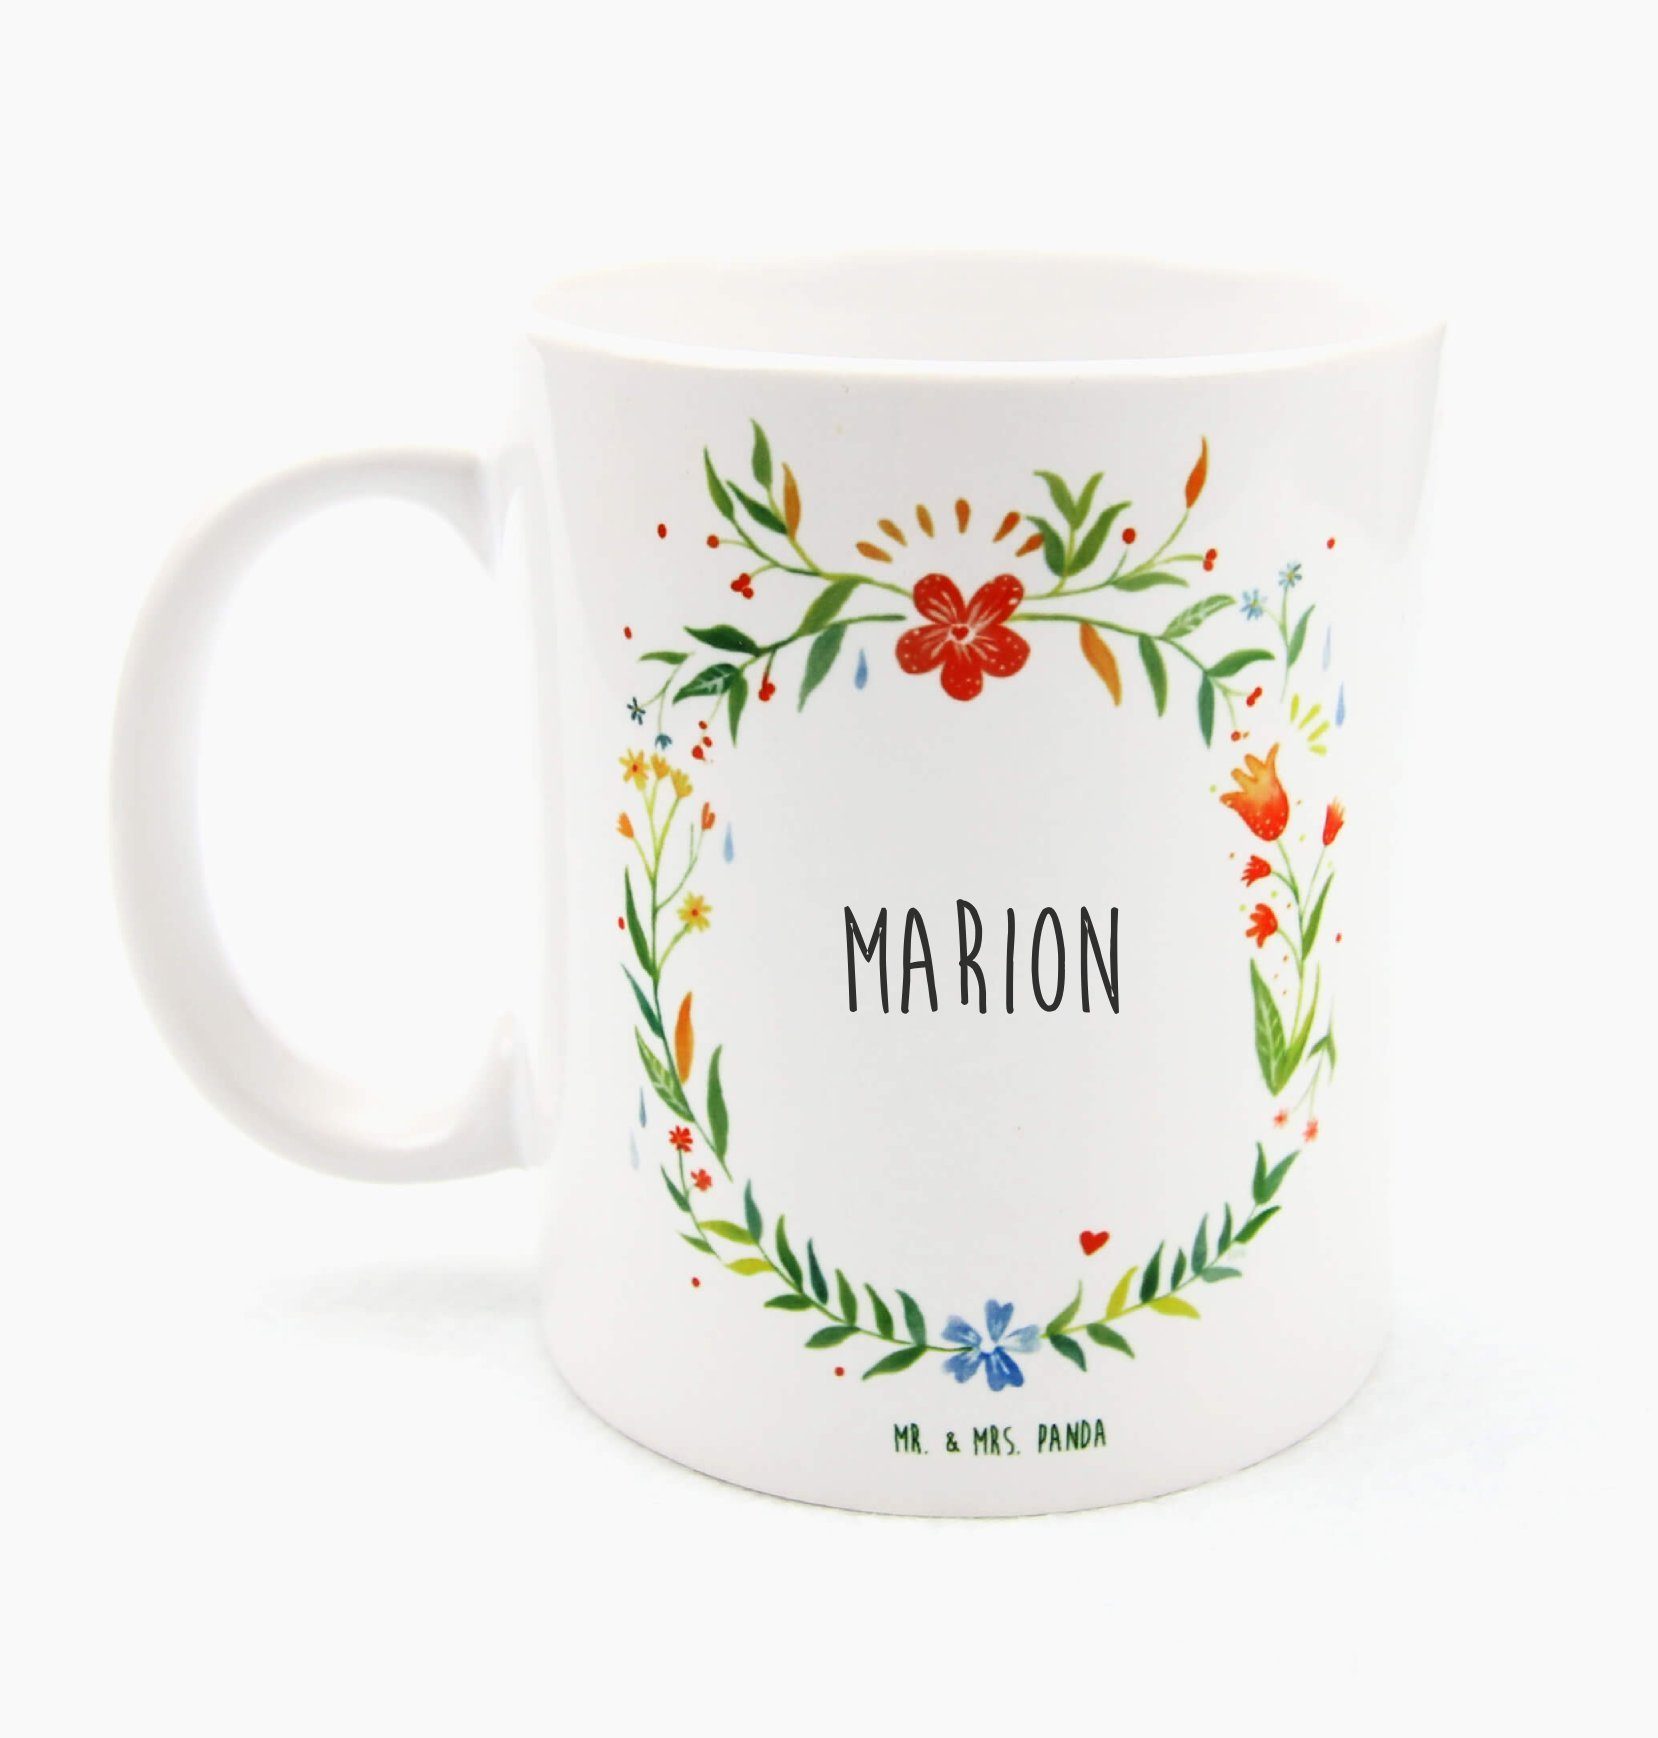 Mr. & Mrs. Panda Tasse Marion - Geschenk, Tasse, Büro Tasse, Keramiktasse, Kaffeebecher, Tas, Keramik | Tassen